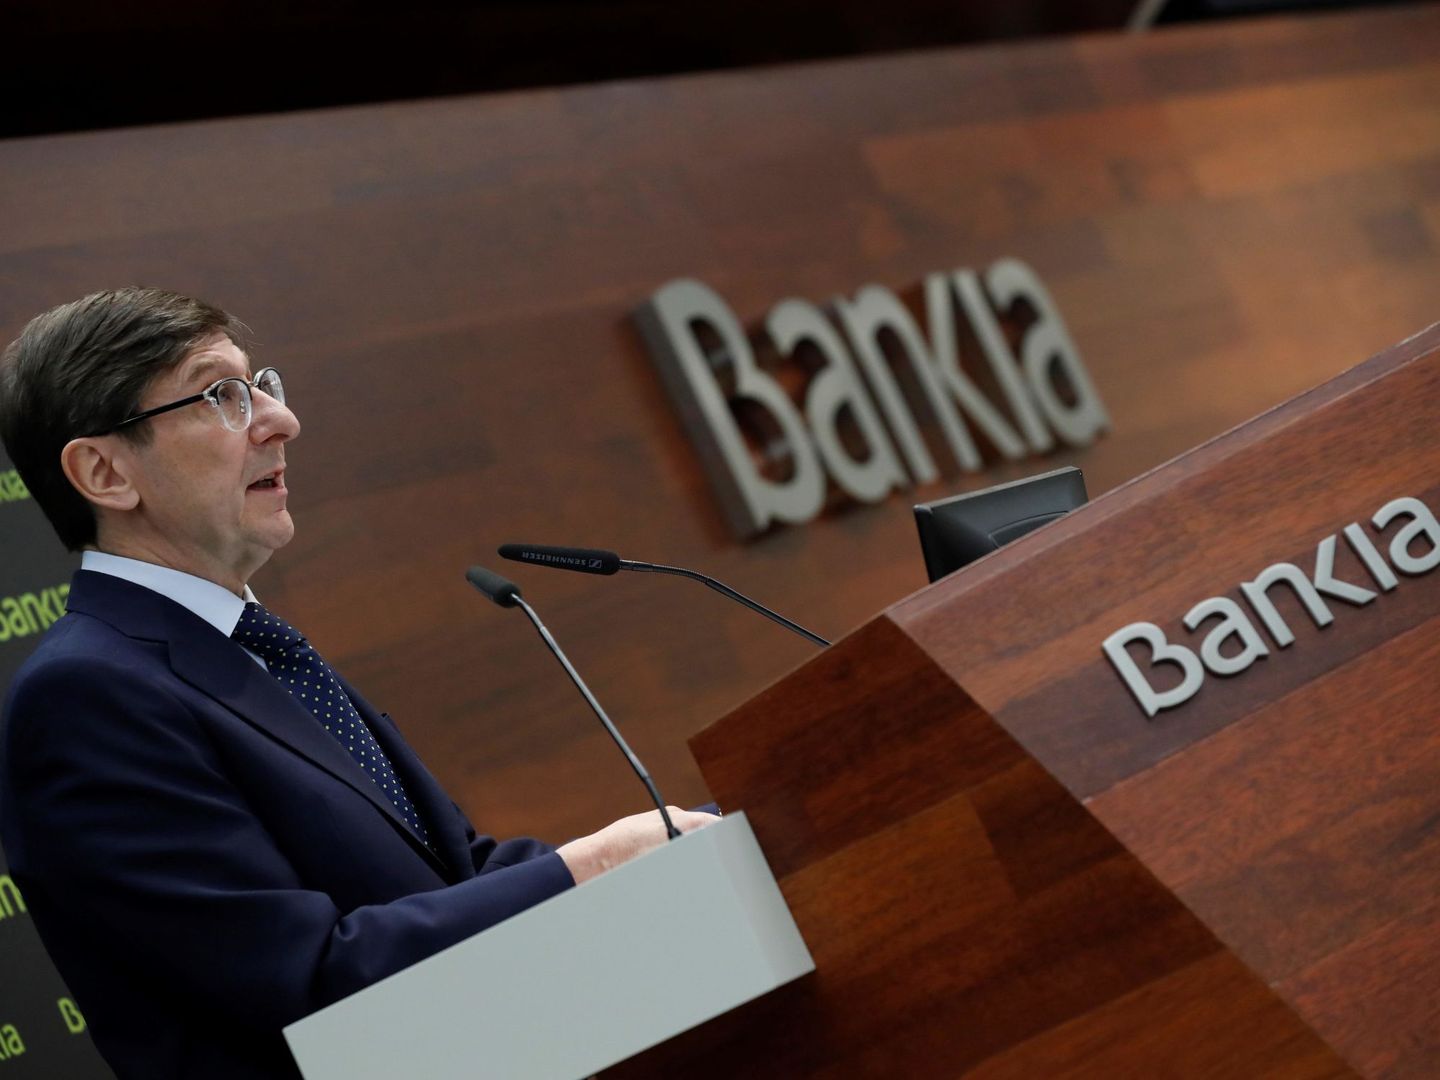 El presidente de Bankia, José Ignacio Goirigolzarri. (EFE)